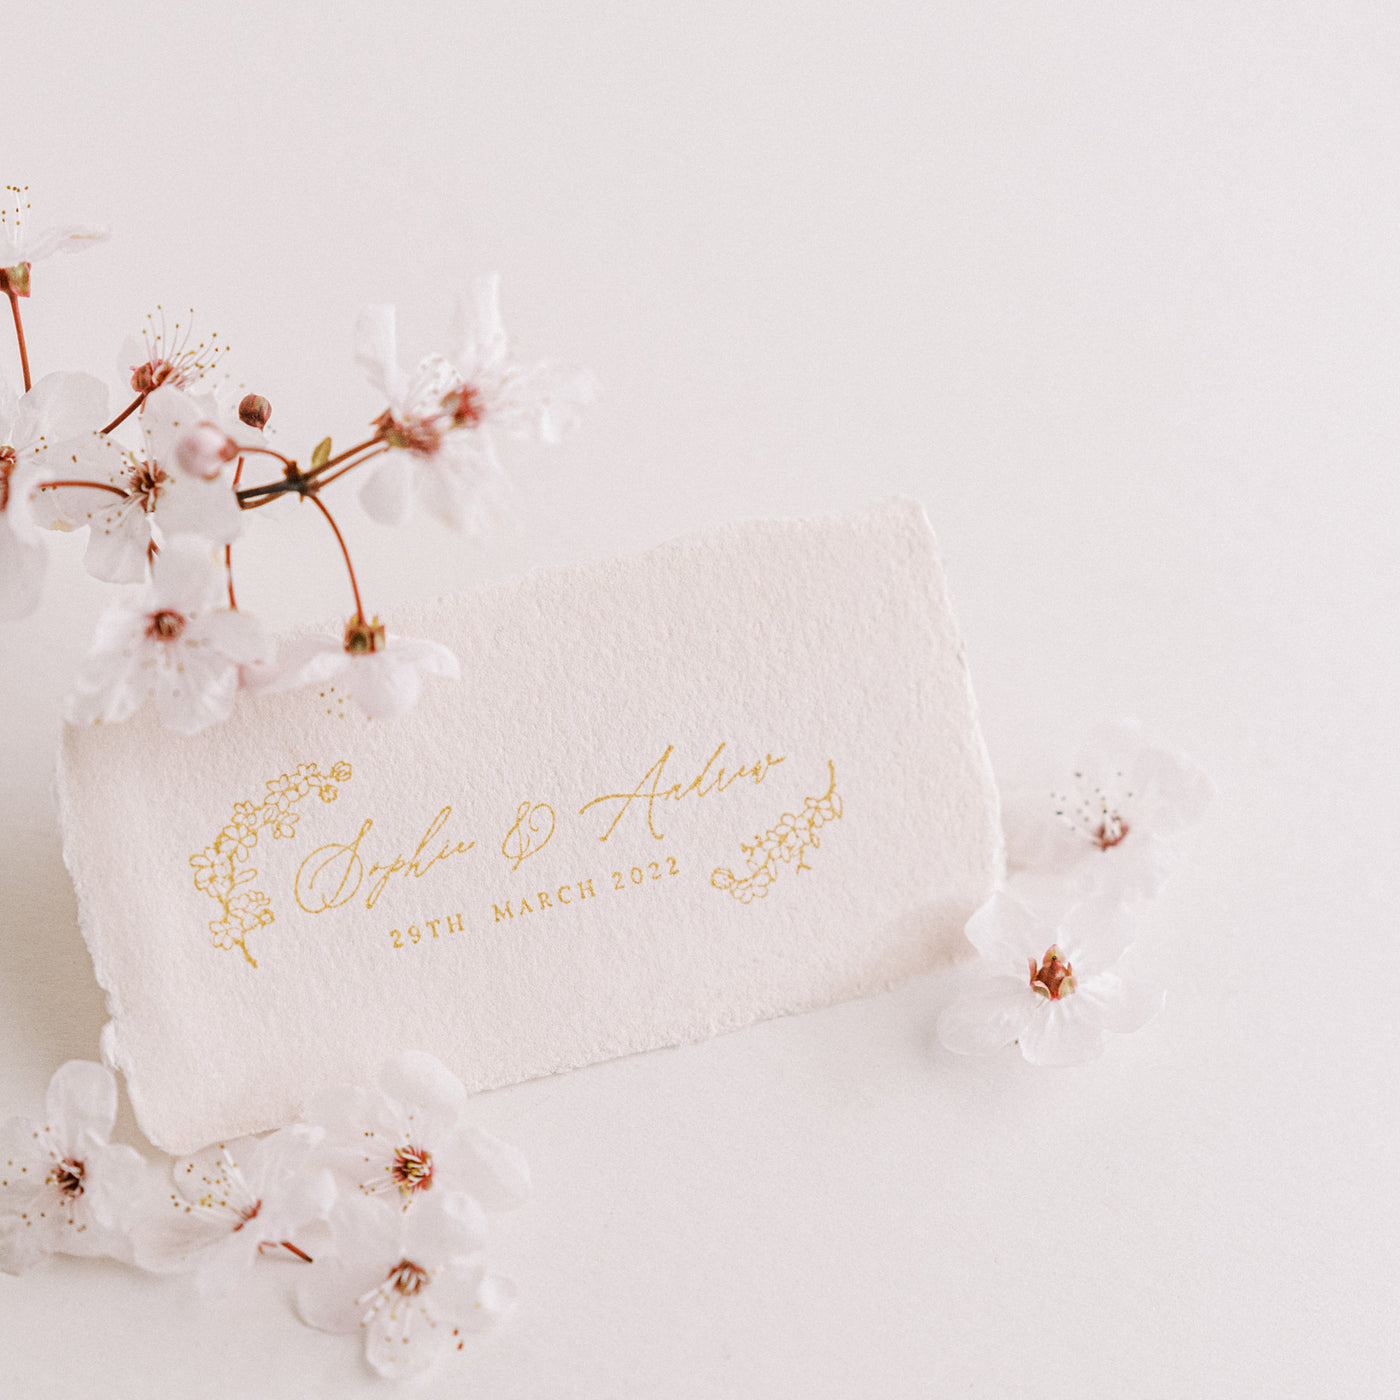 Suki Cherry Blossom Save The Date Rubber Stamp Design | 'Sakura' Cherry Blossom Embellishments for Blush Pink Spring Wedding | Heirloom Seals